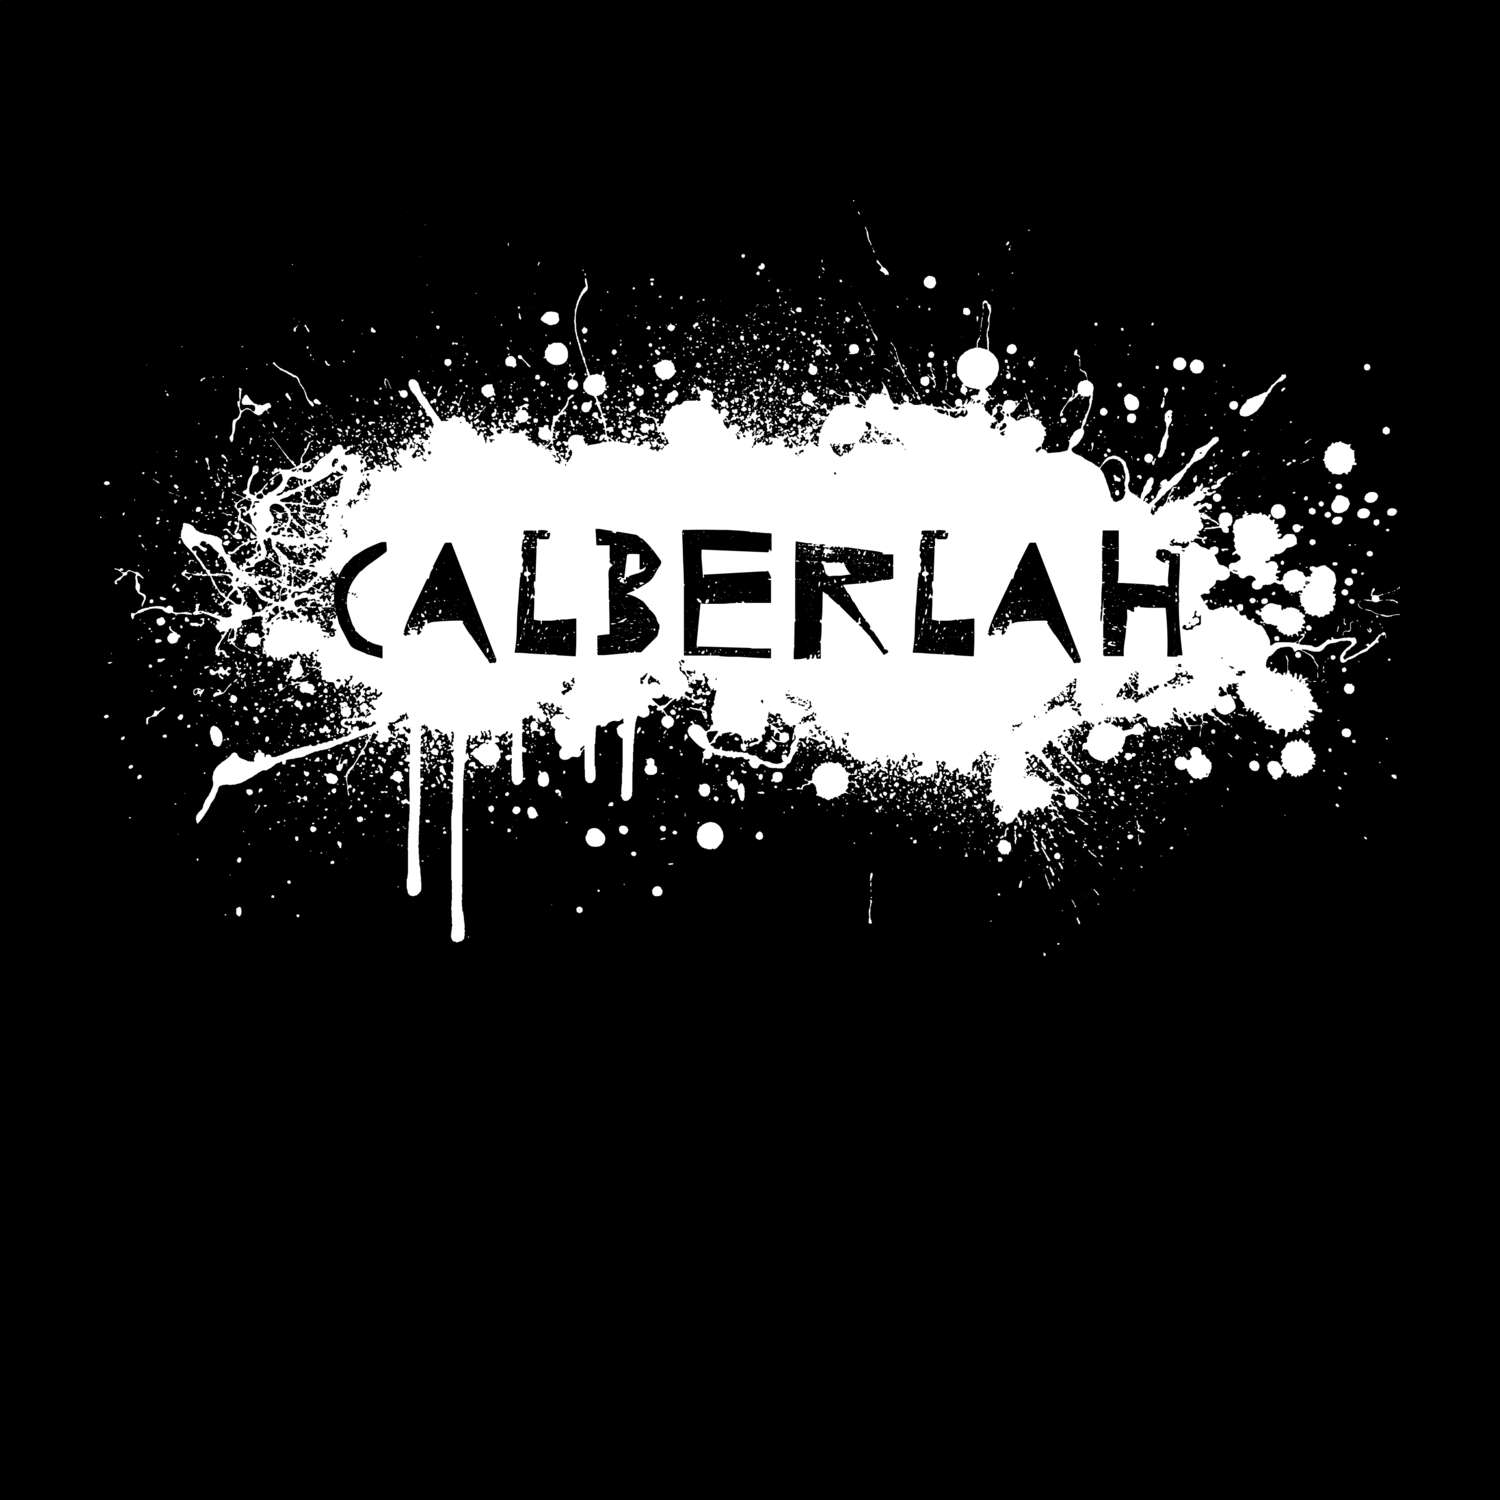 Calberlah T-Shirt »Paint Splash Punk«